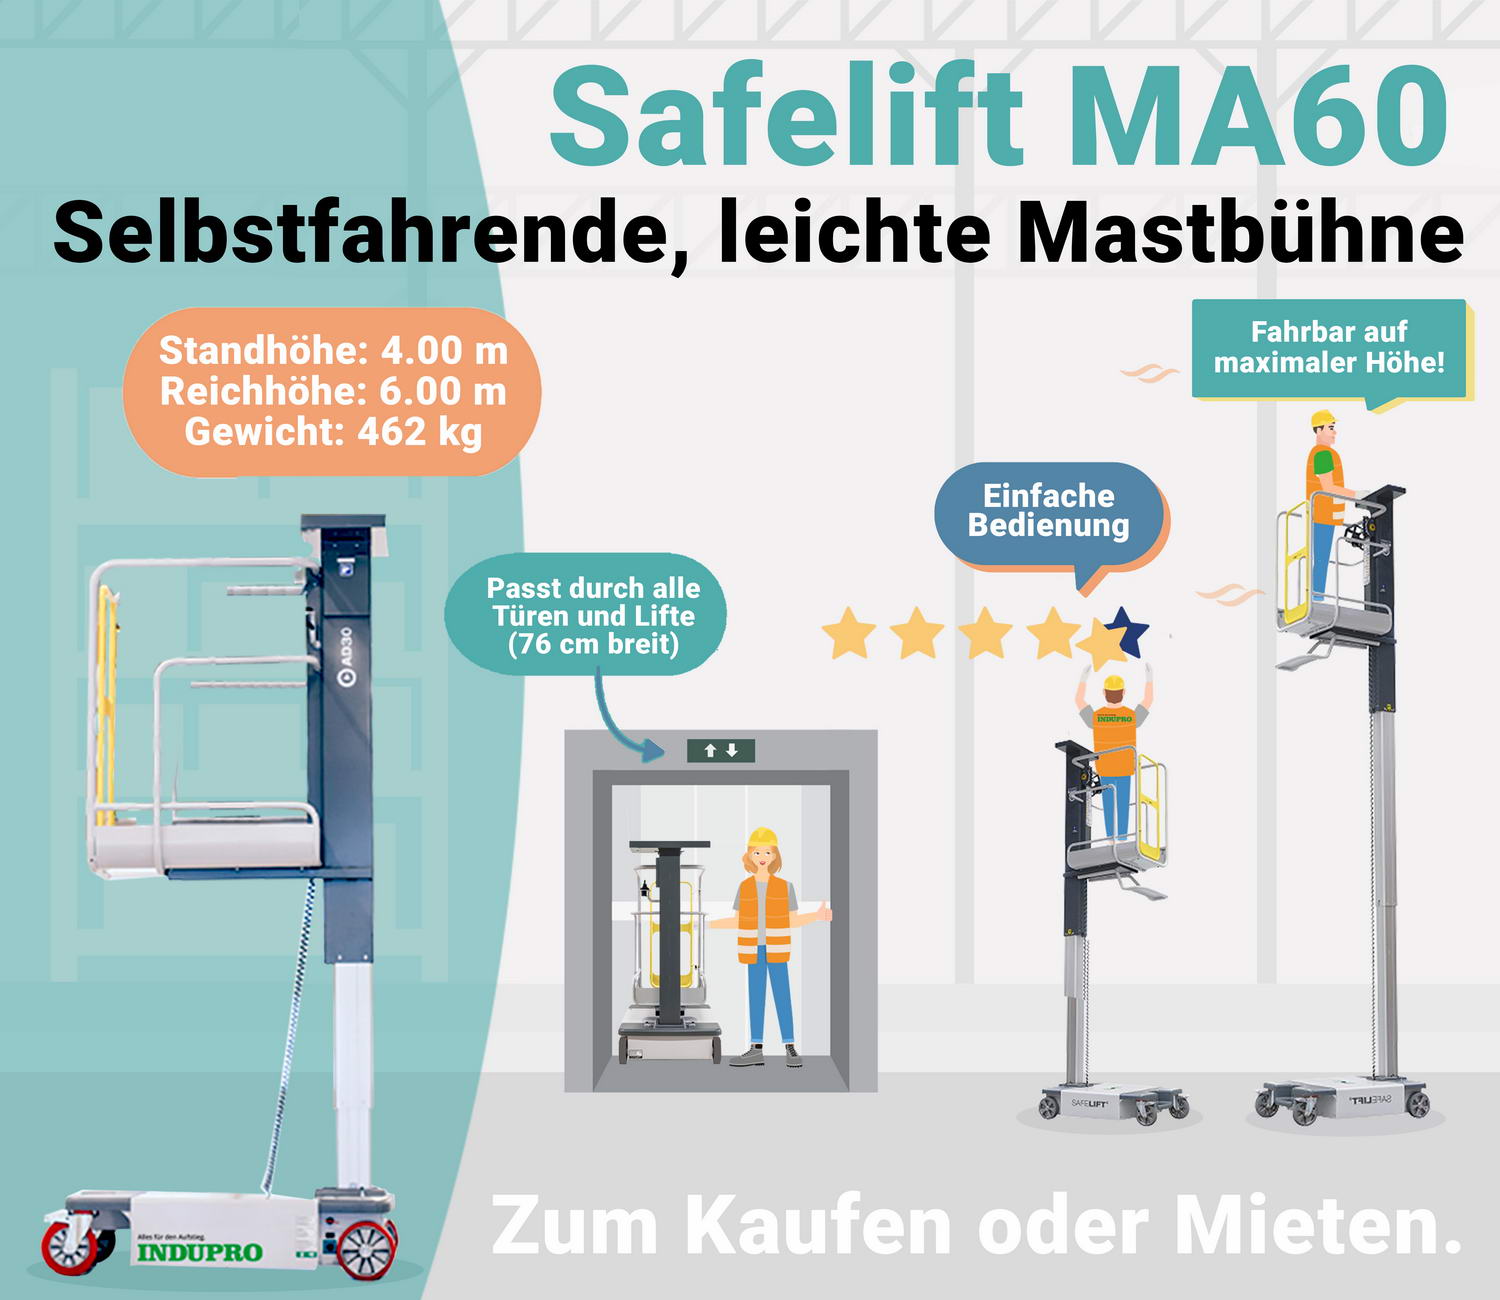 Safelift MA60